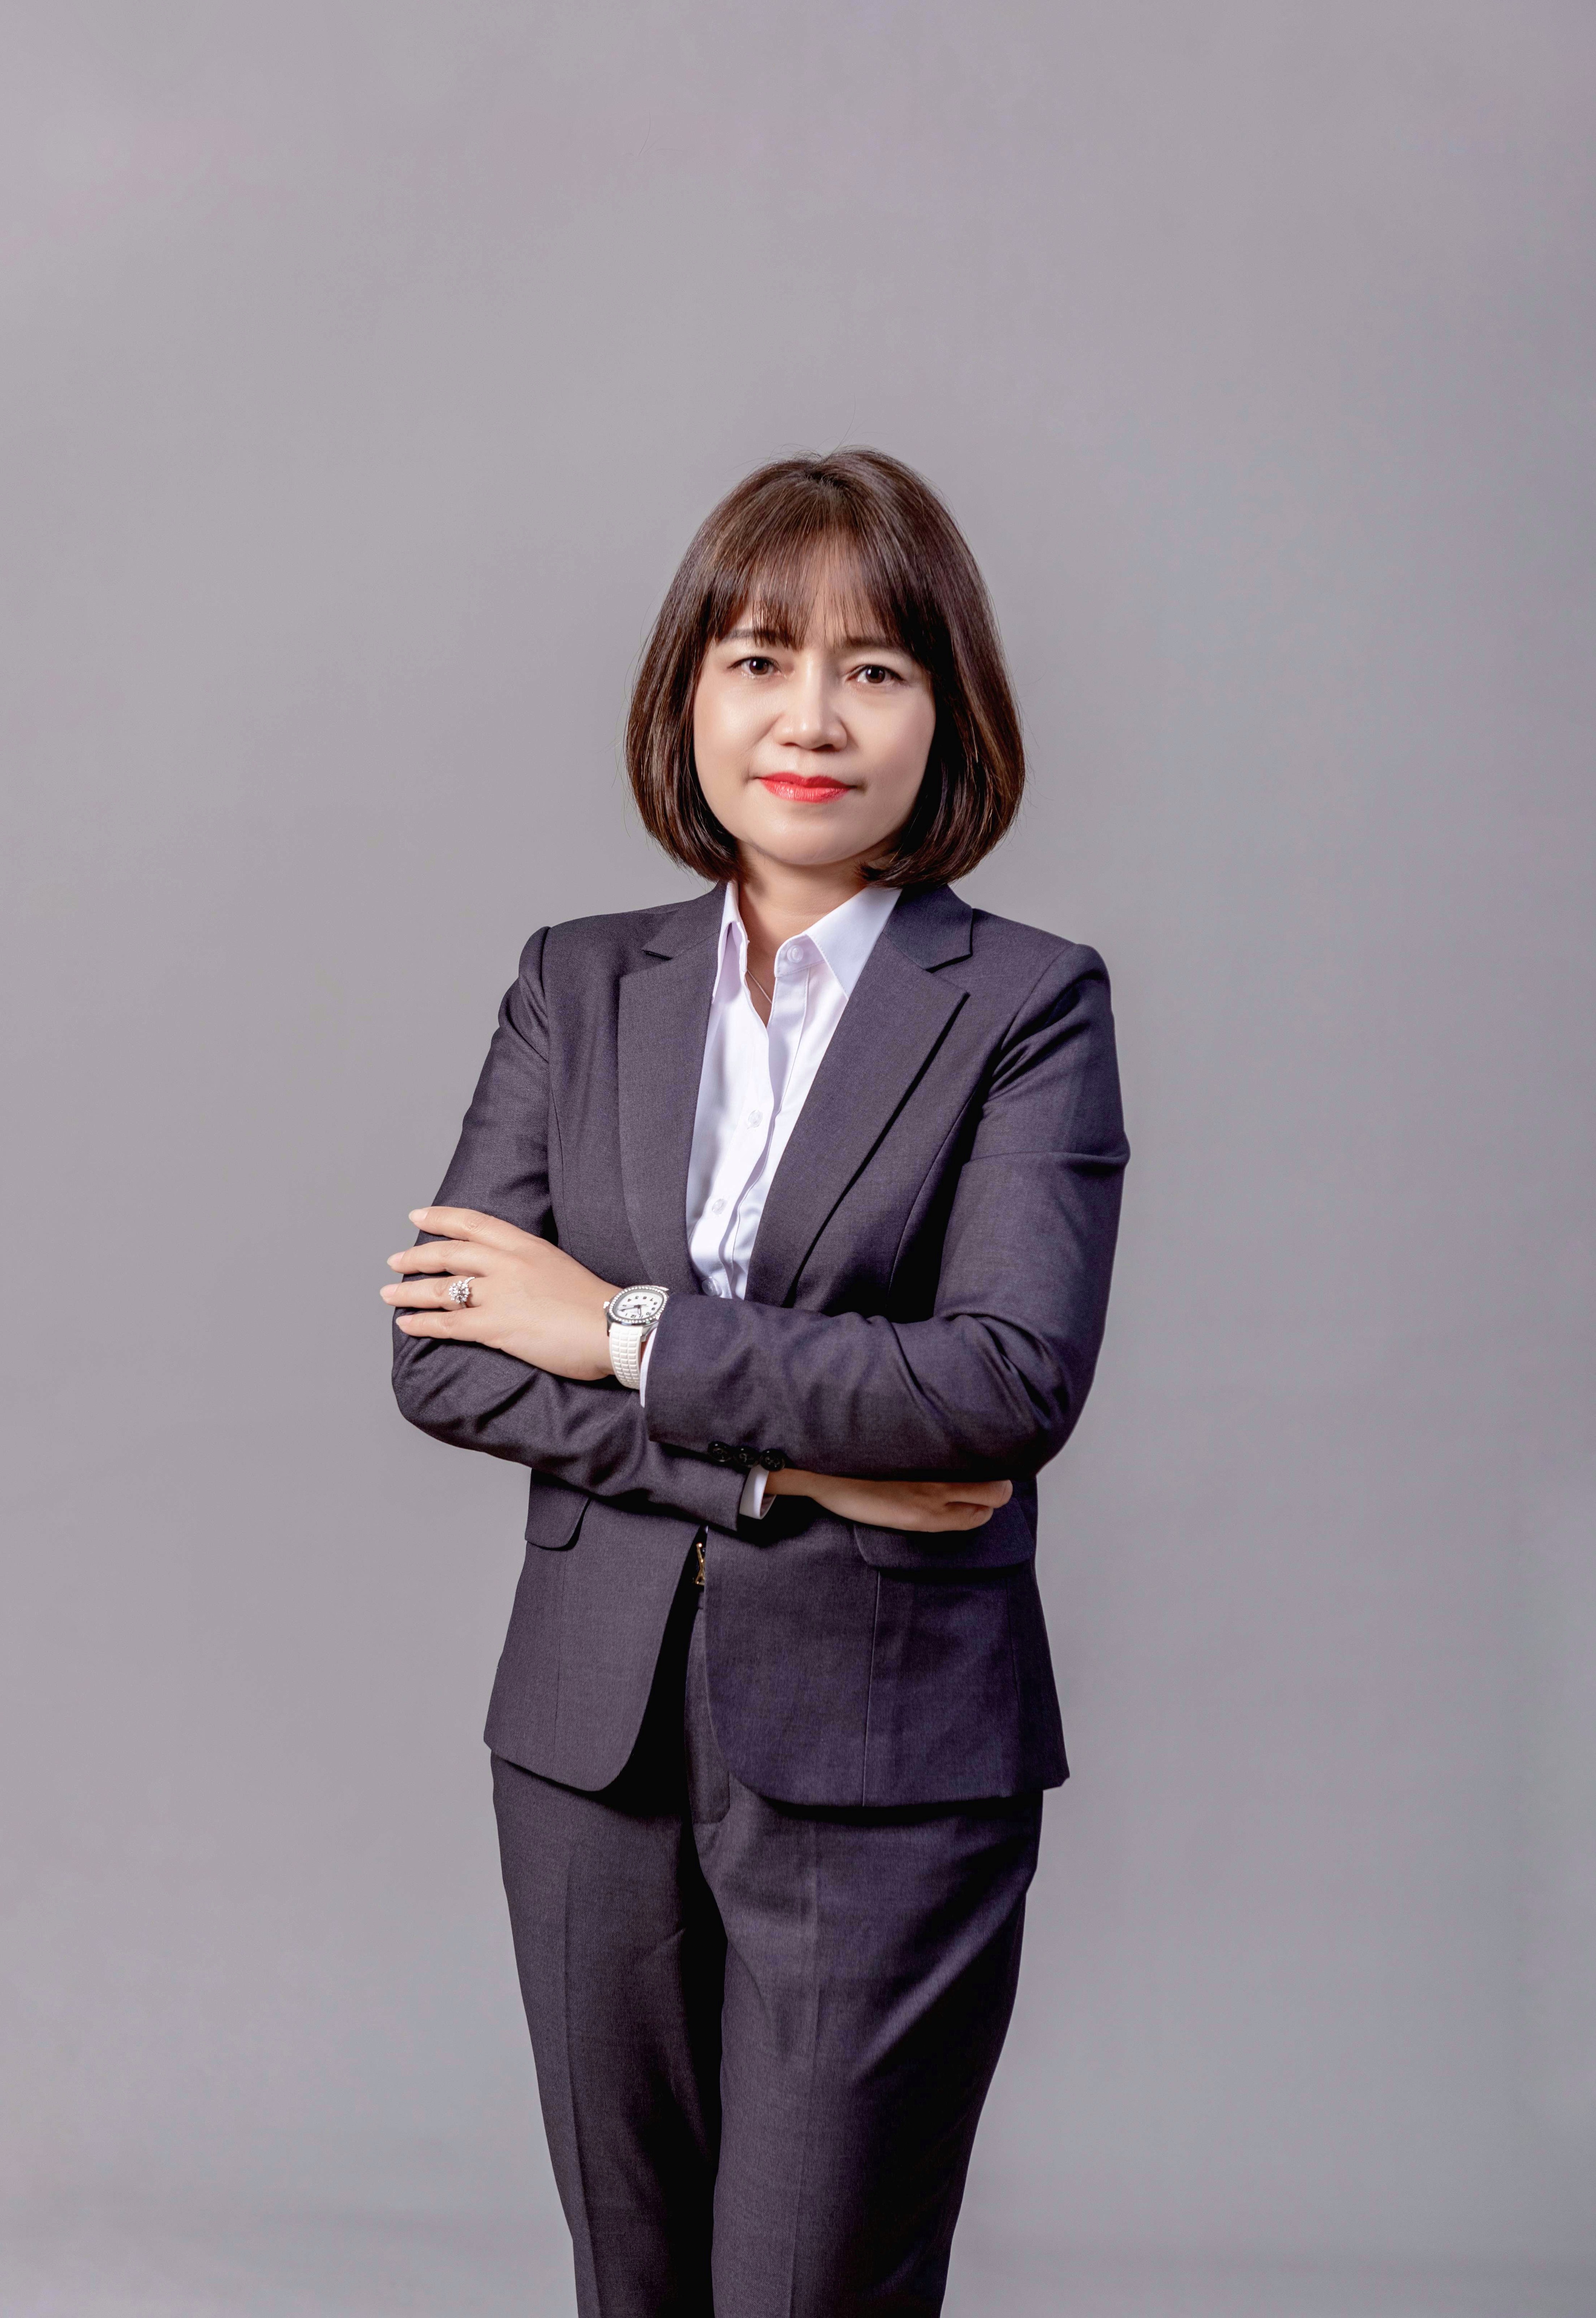 Mrs. Dao Thi Thanh Hien